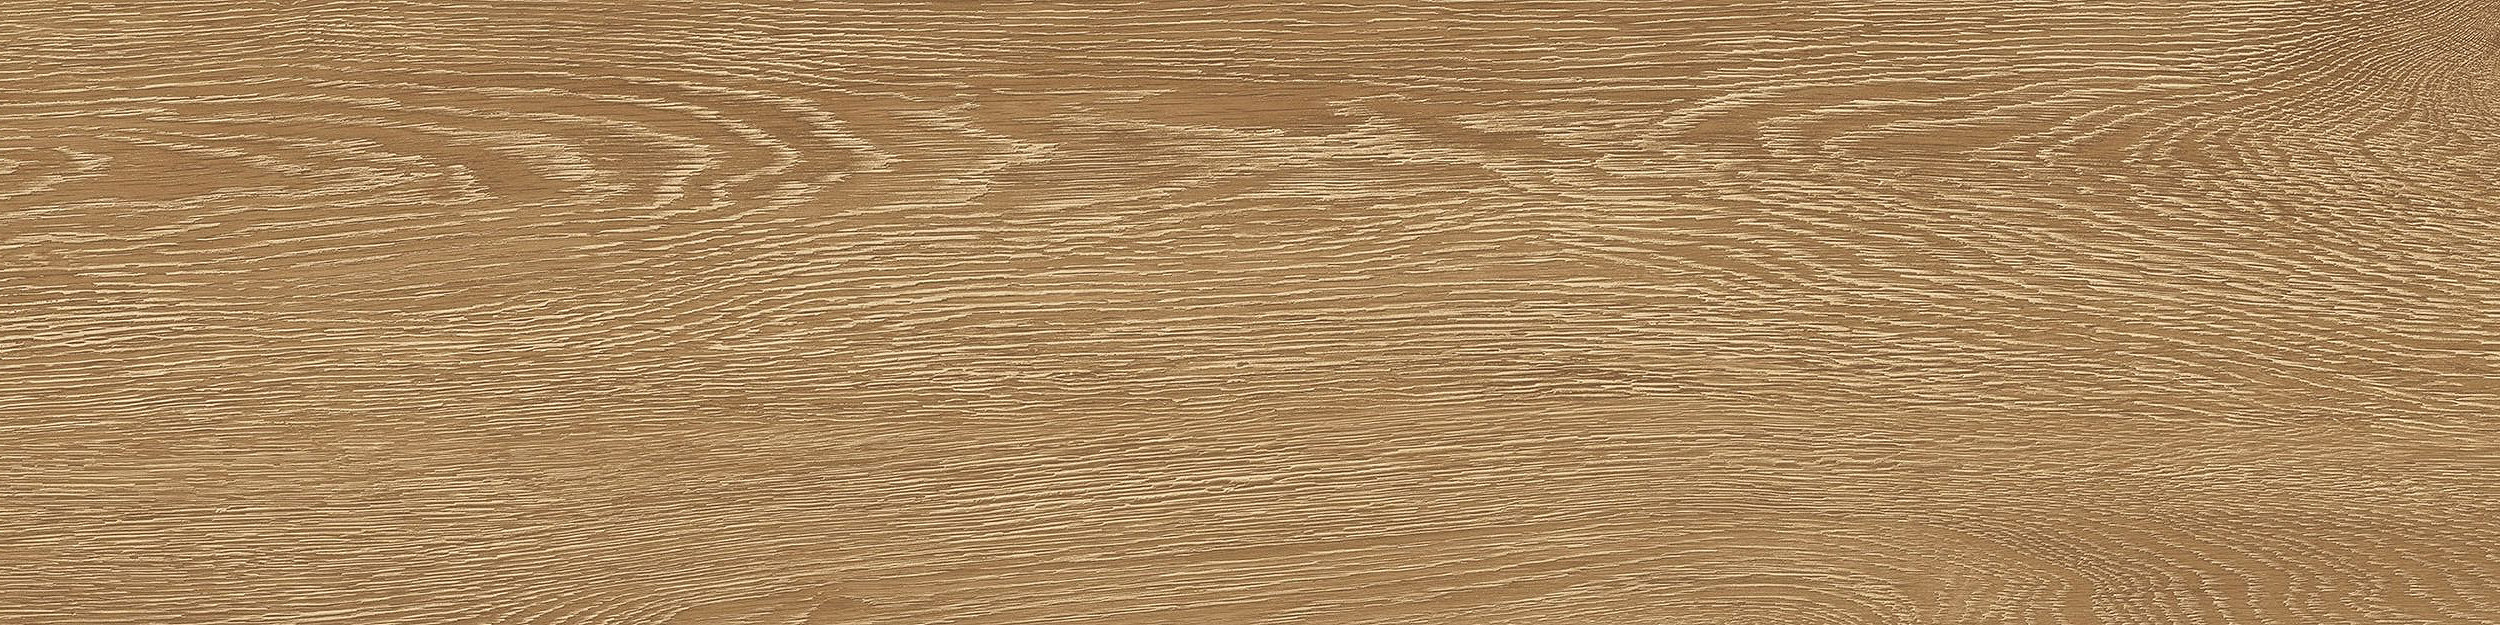 Textured Woodgrains LVT In Antique Oak imagen número 11